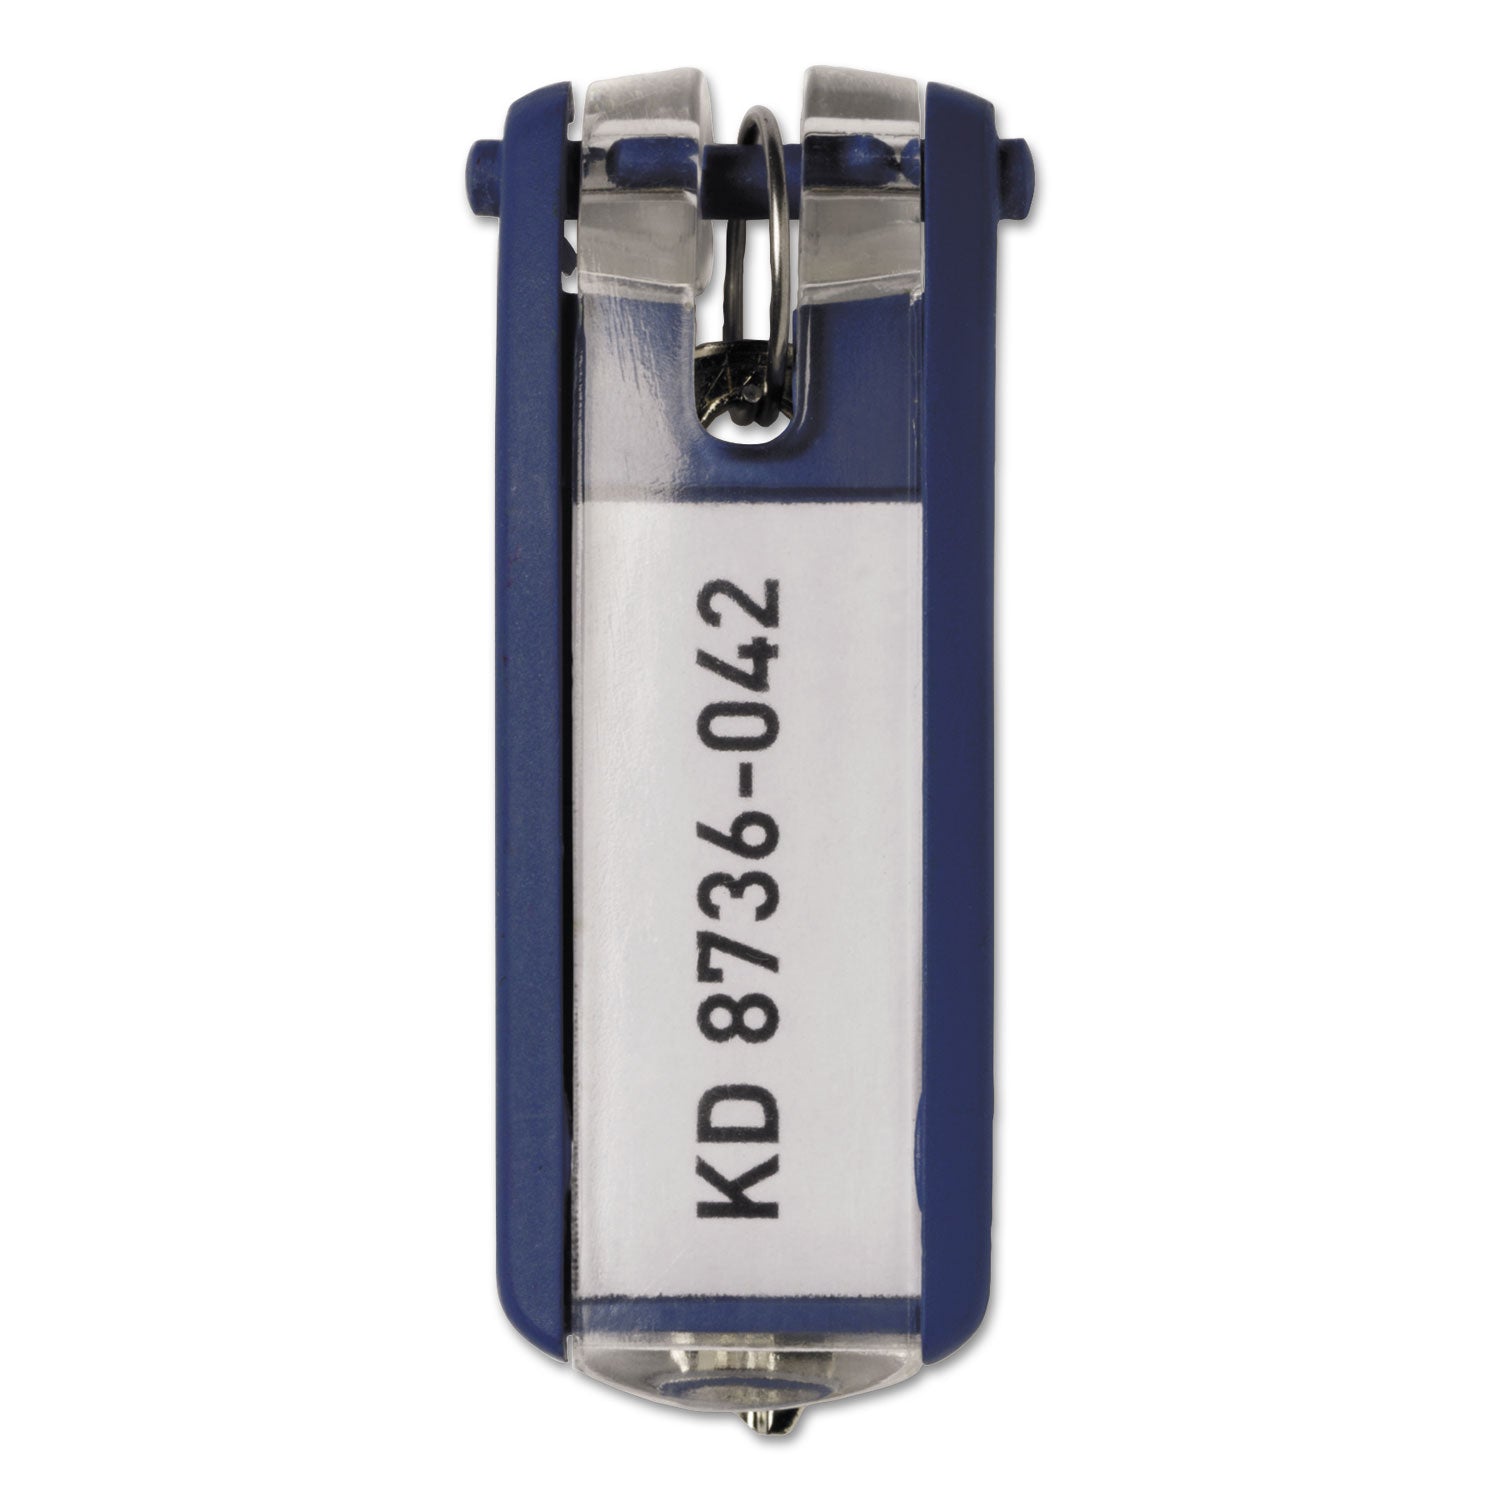 Tags for Locking Key Cabinets, Plastic, 1.13 x 2.75, Dark Blue, 6/Pack - 